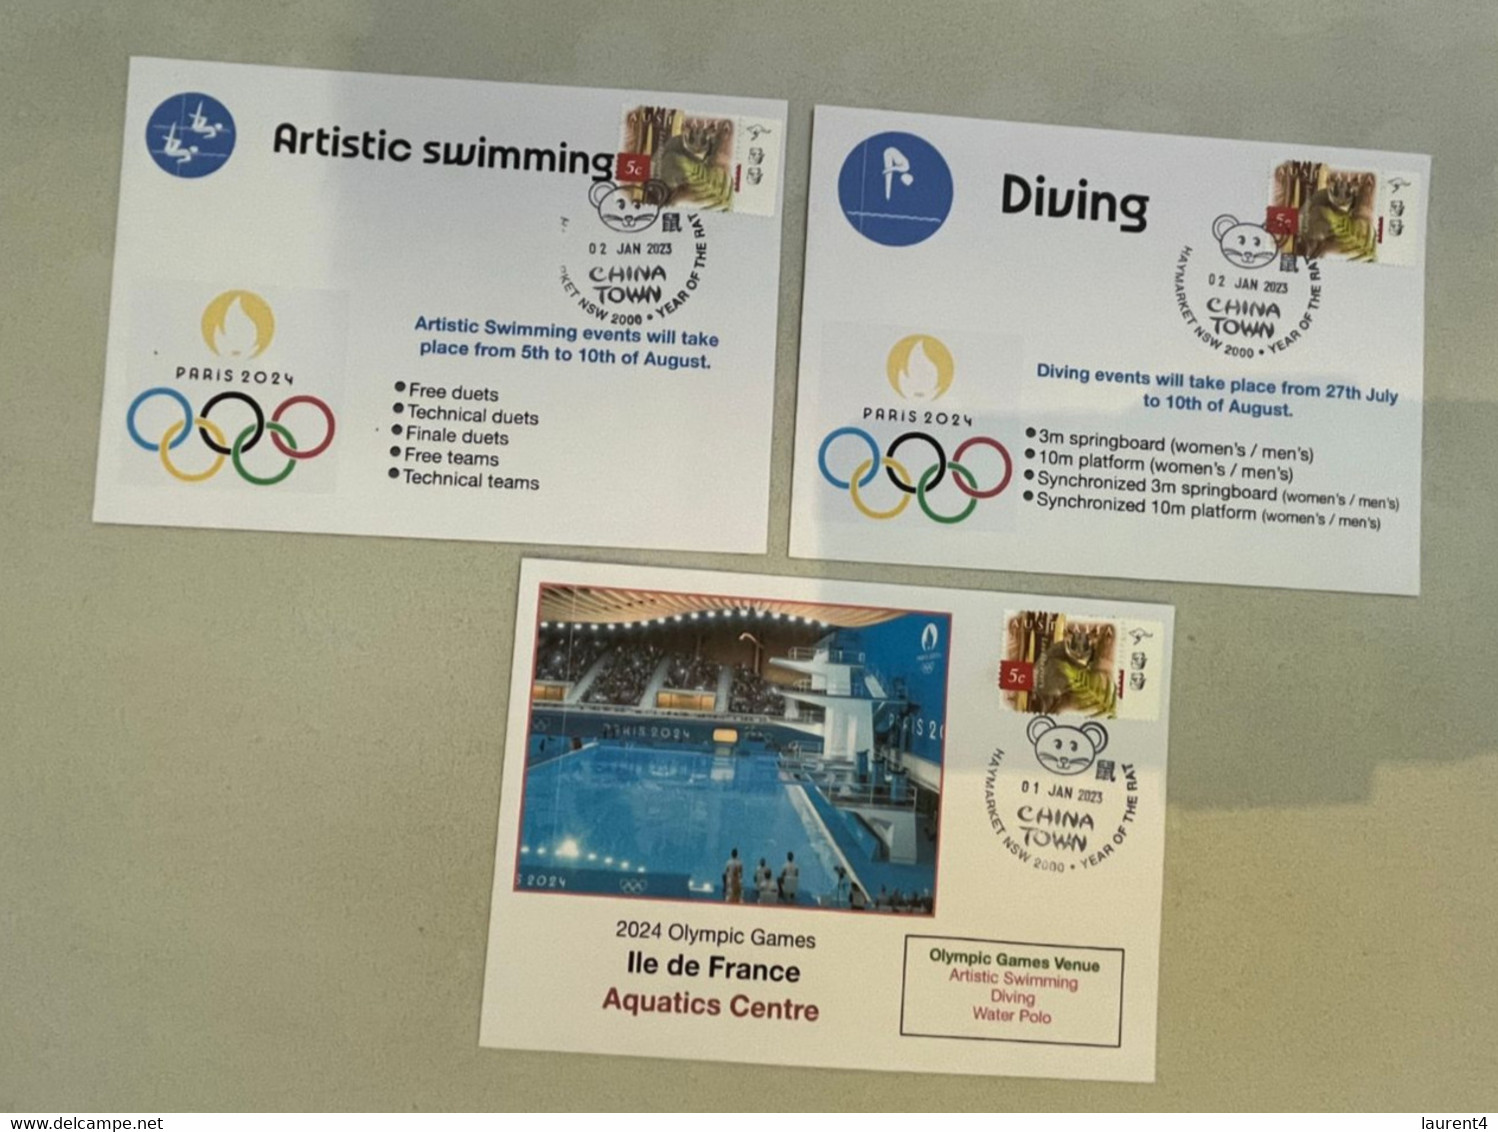 (4 N 3 A) Paris 2024 Olympic Games - Olympic Venues & Sport - Paris - Aquatic Centre (Swimming - Diving - Water Polo) 3 - Sommer 2024: Paris